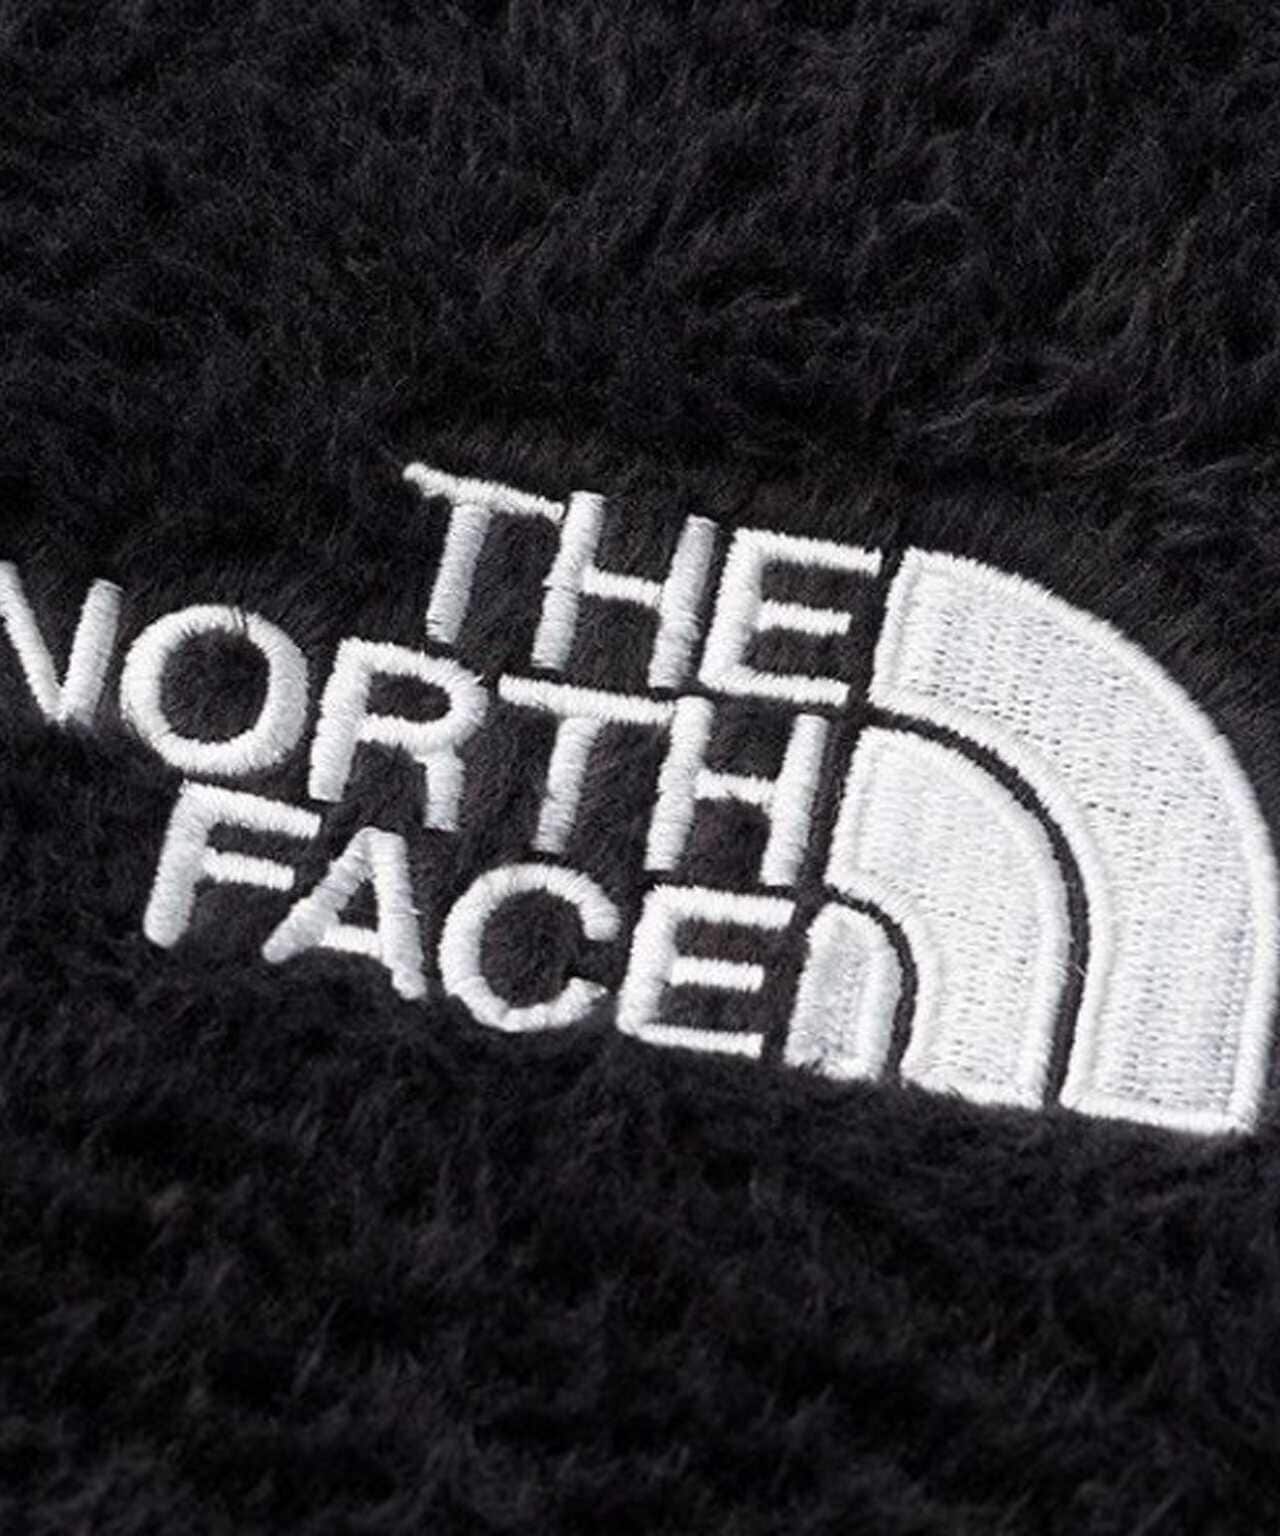 THE NORTH FACE (ザ ノースフェイス) Antarctica Versa Loft Jacket